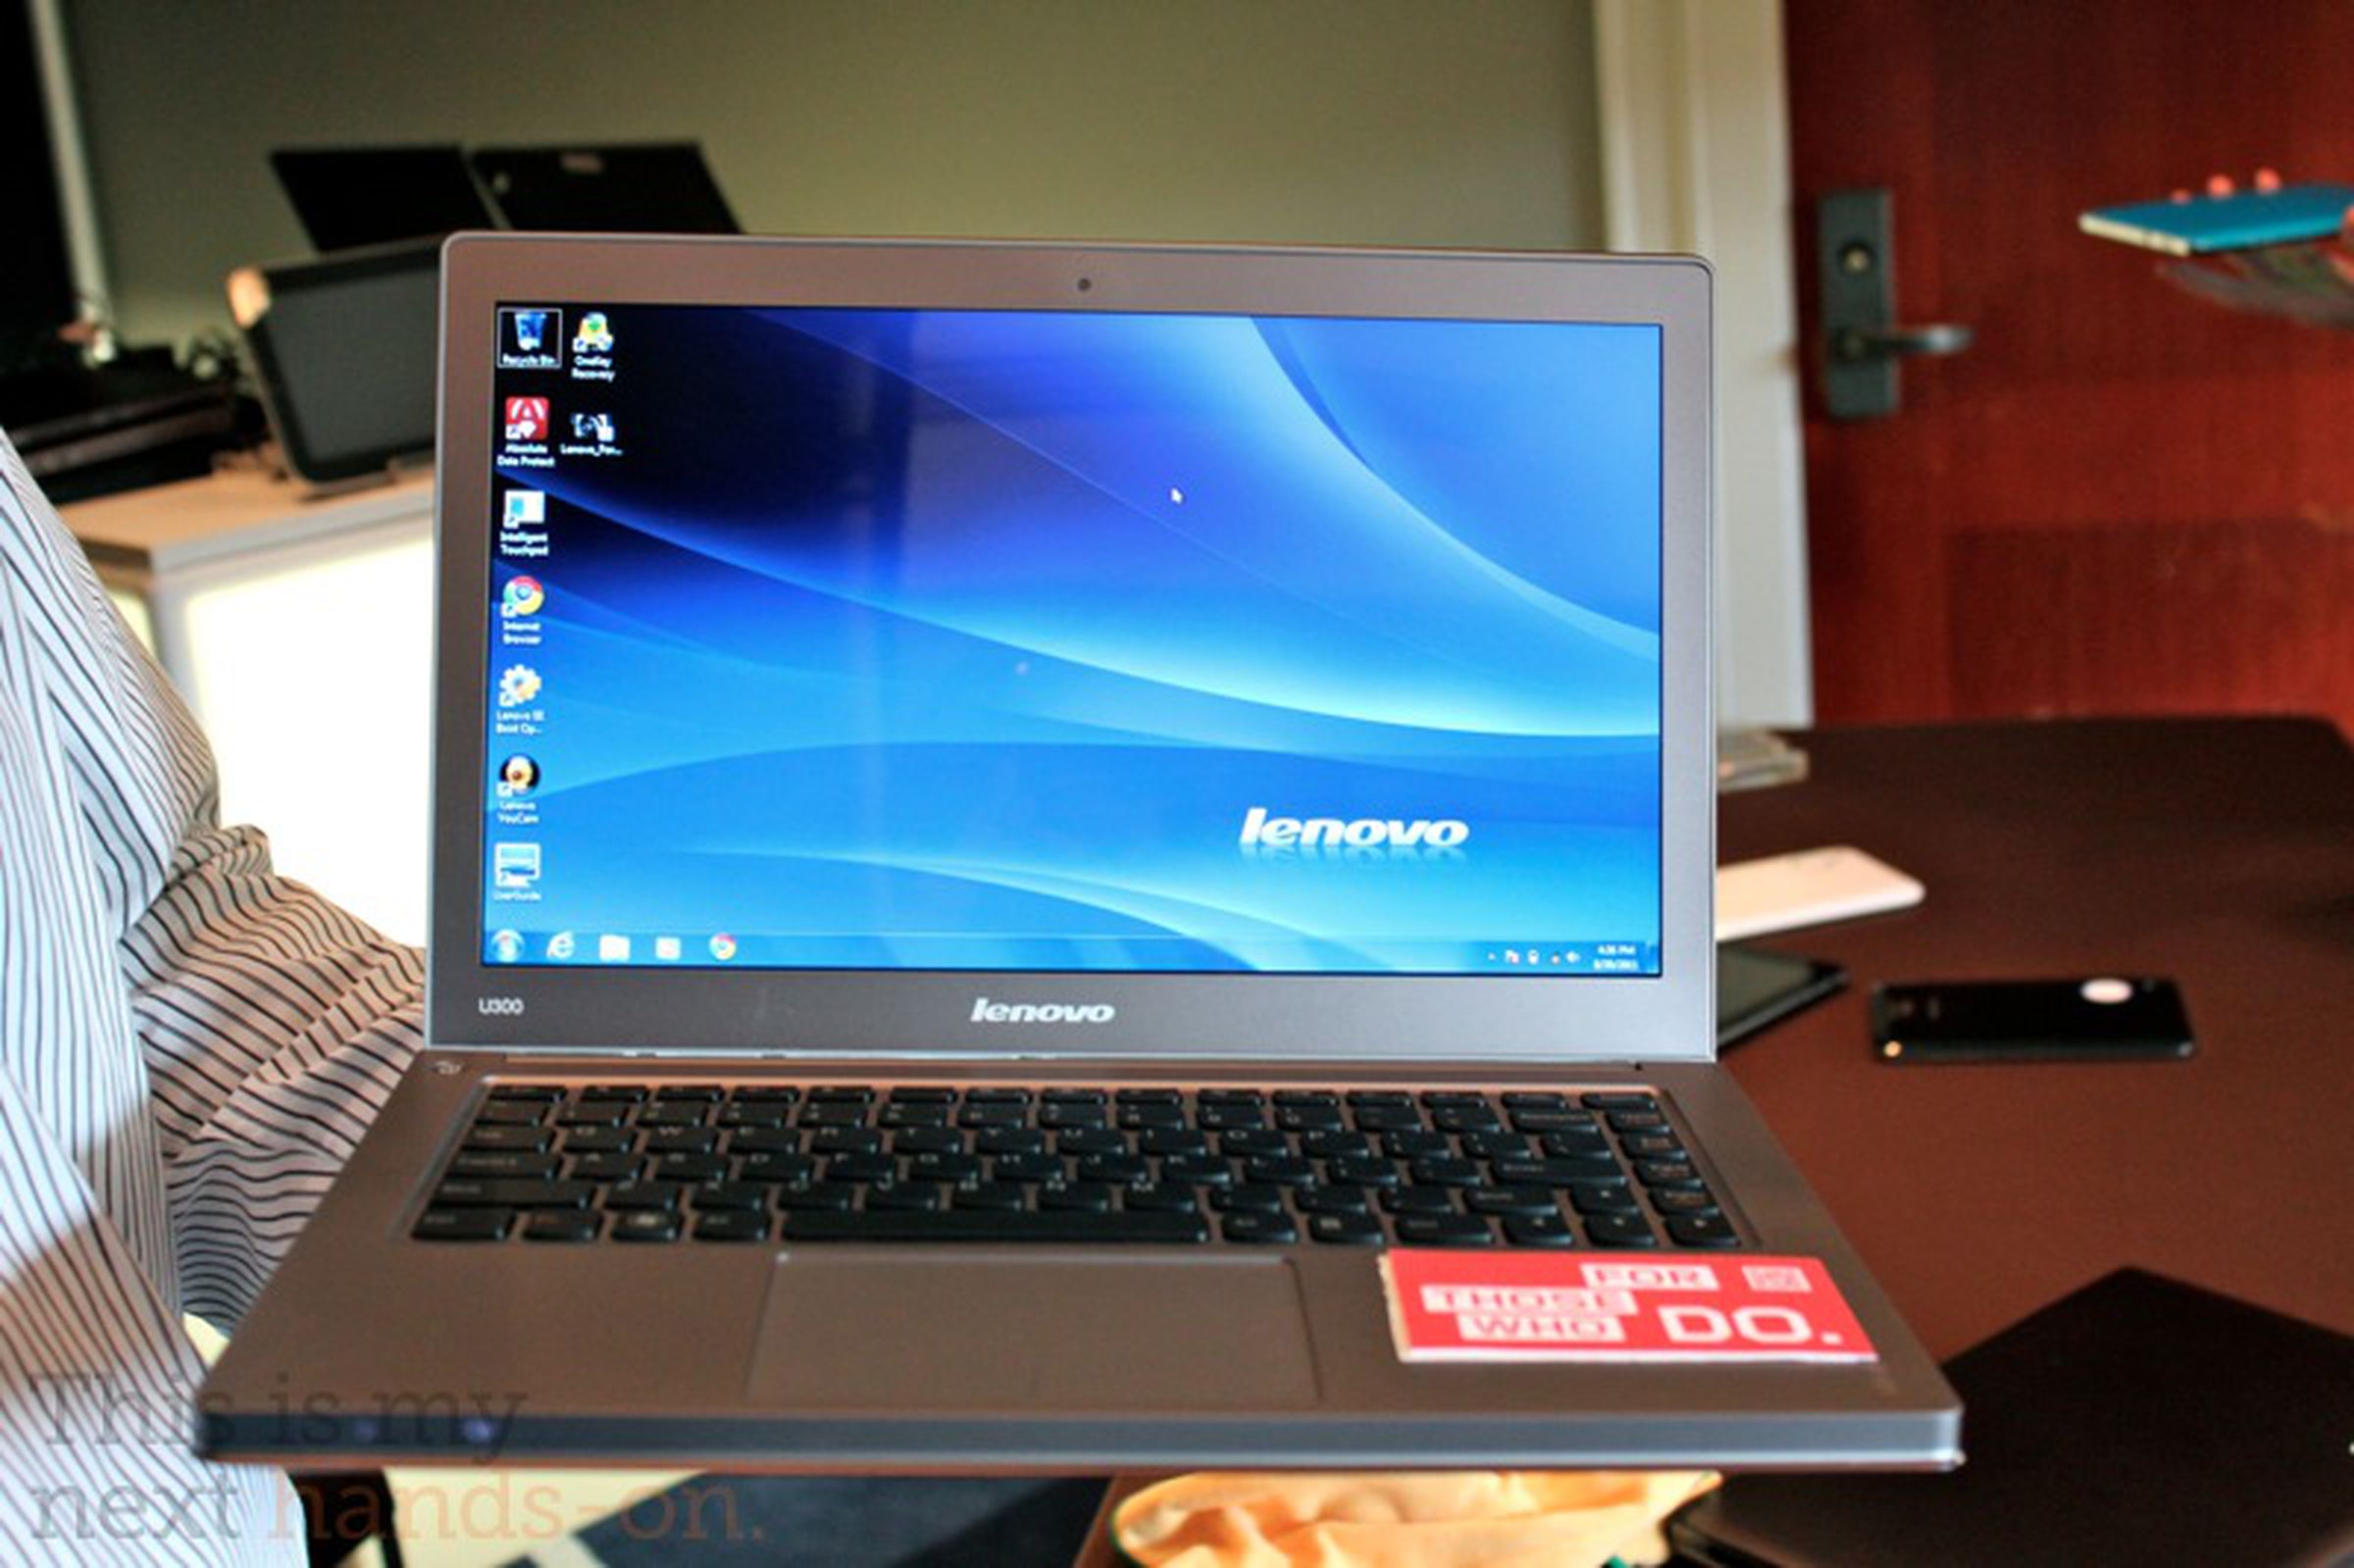 Lenovo IdeaPad U300 and U400 hands-on photos